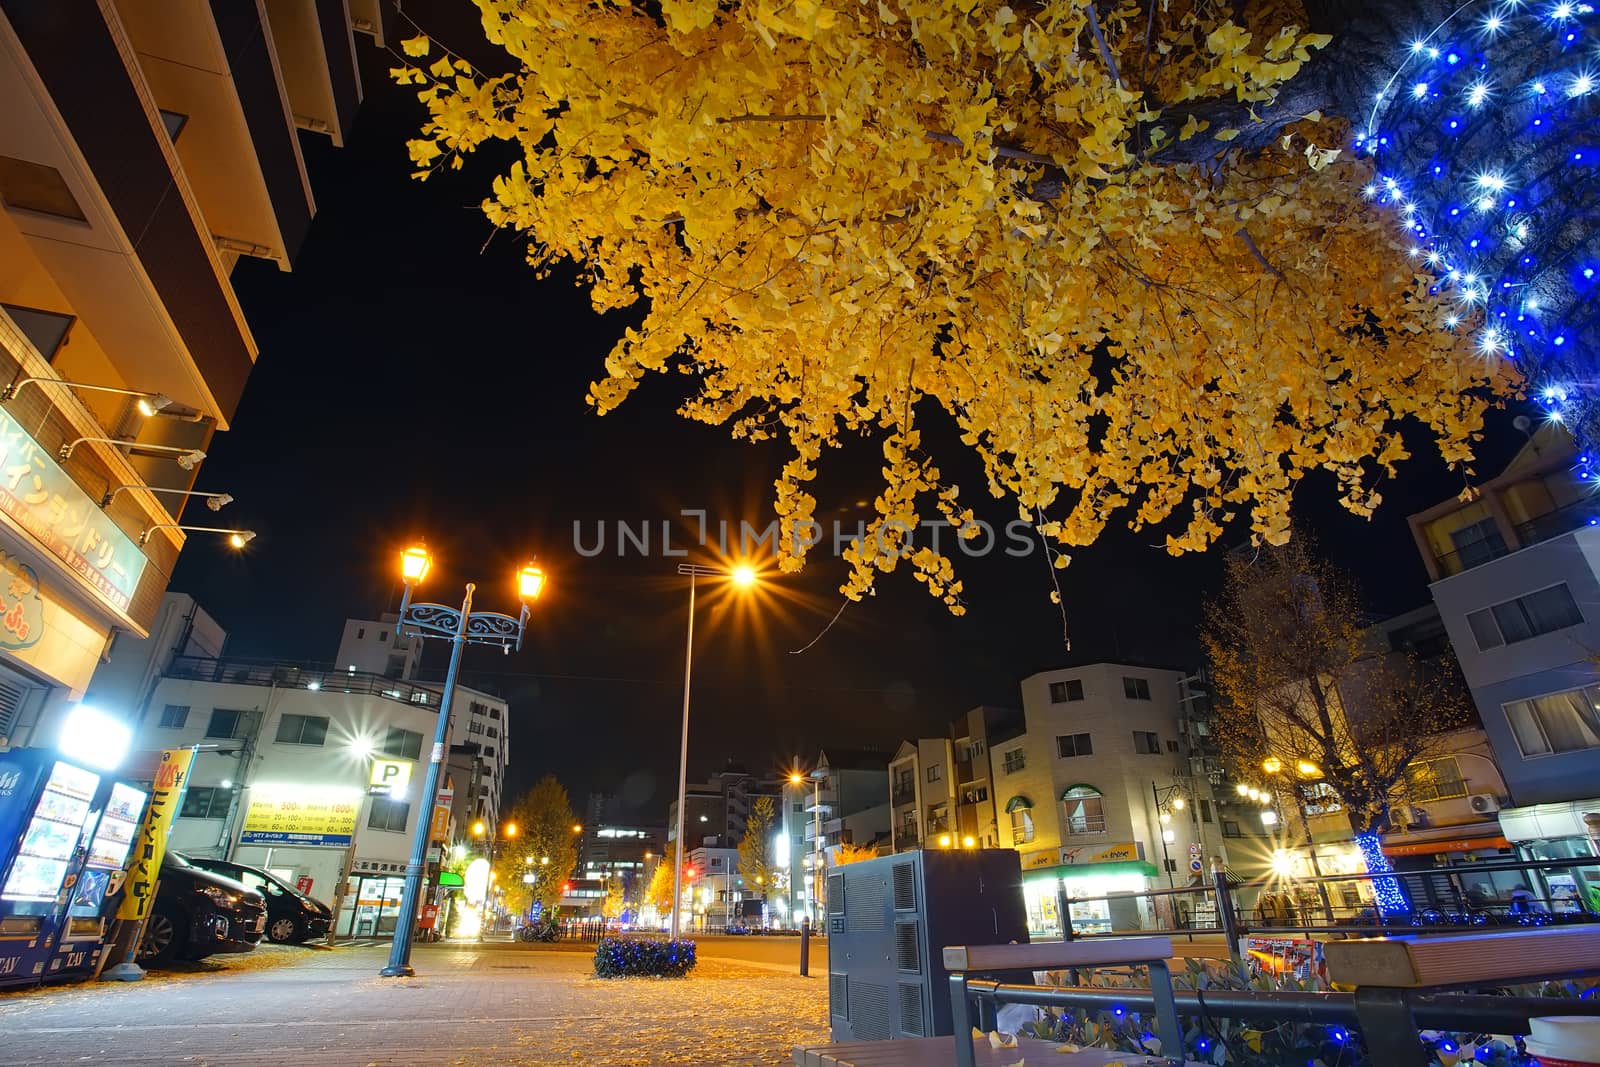 Osaka, Japan - December 16, 2019 : Night scene with beautiful yellow leaves of Ginkgo tree in Tempozan district, Osaka city, Japan.